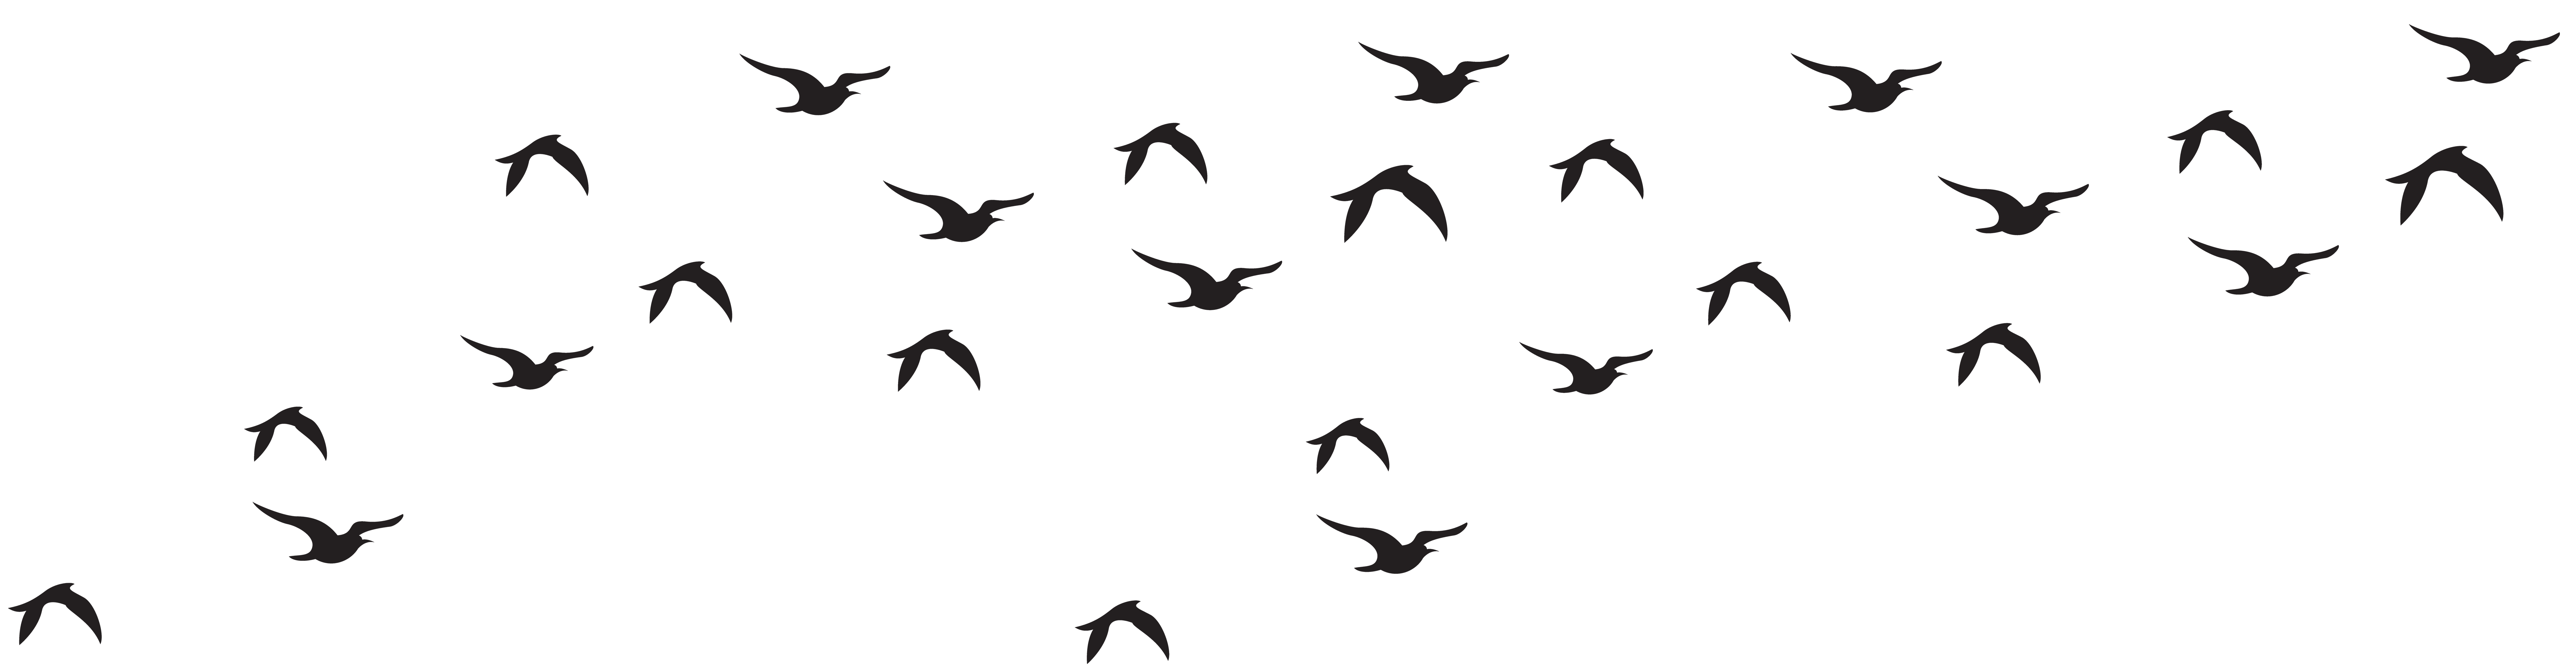 Png 8000X2087 Flock Of Birds Transparent Background - Flock of Birds, Transparent background PNG HD thumbnail